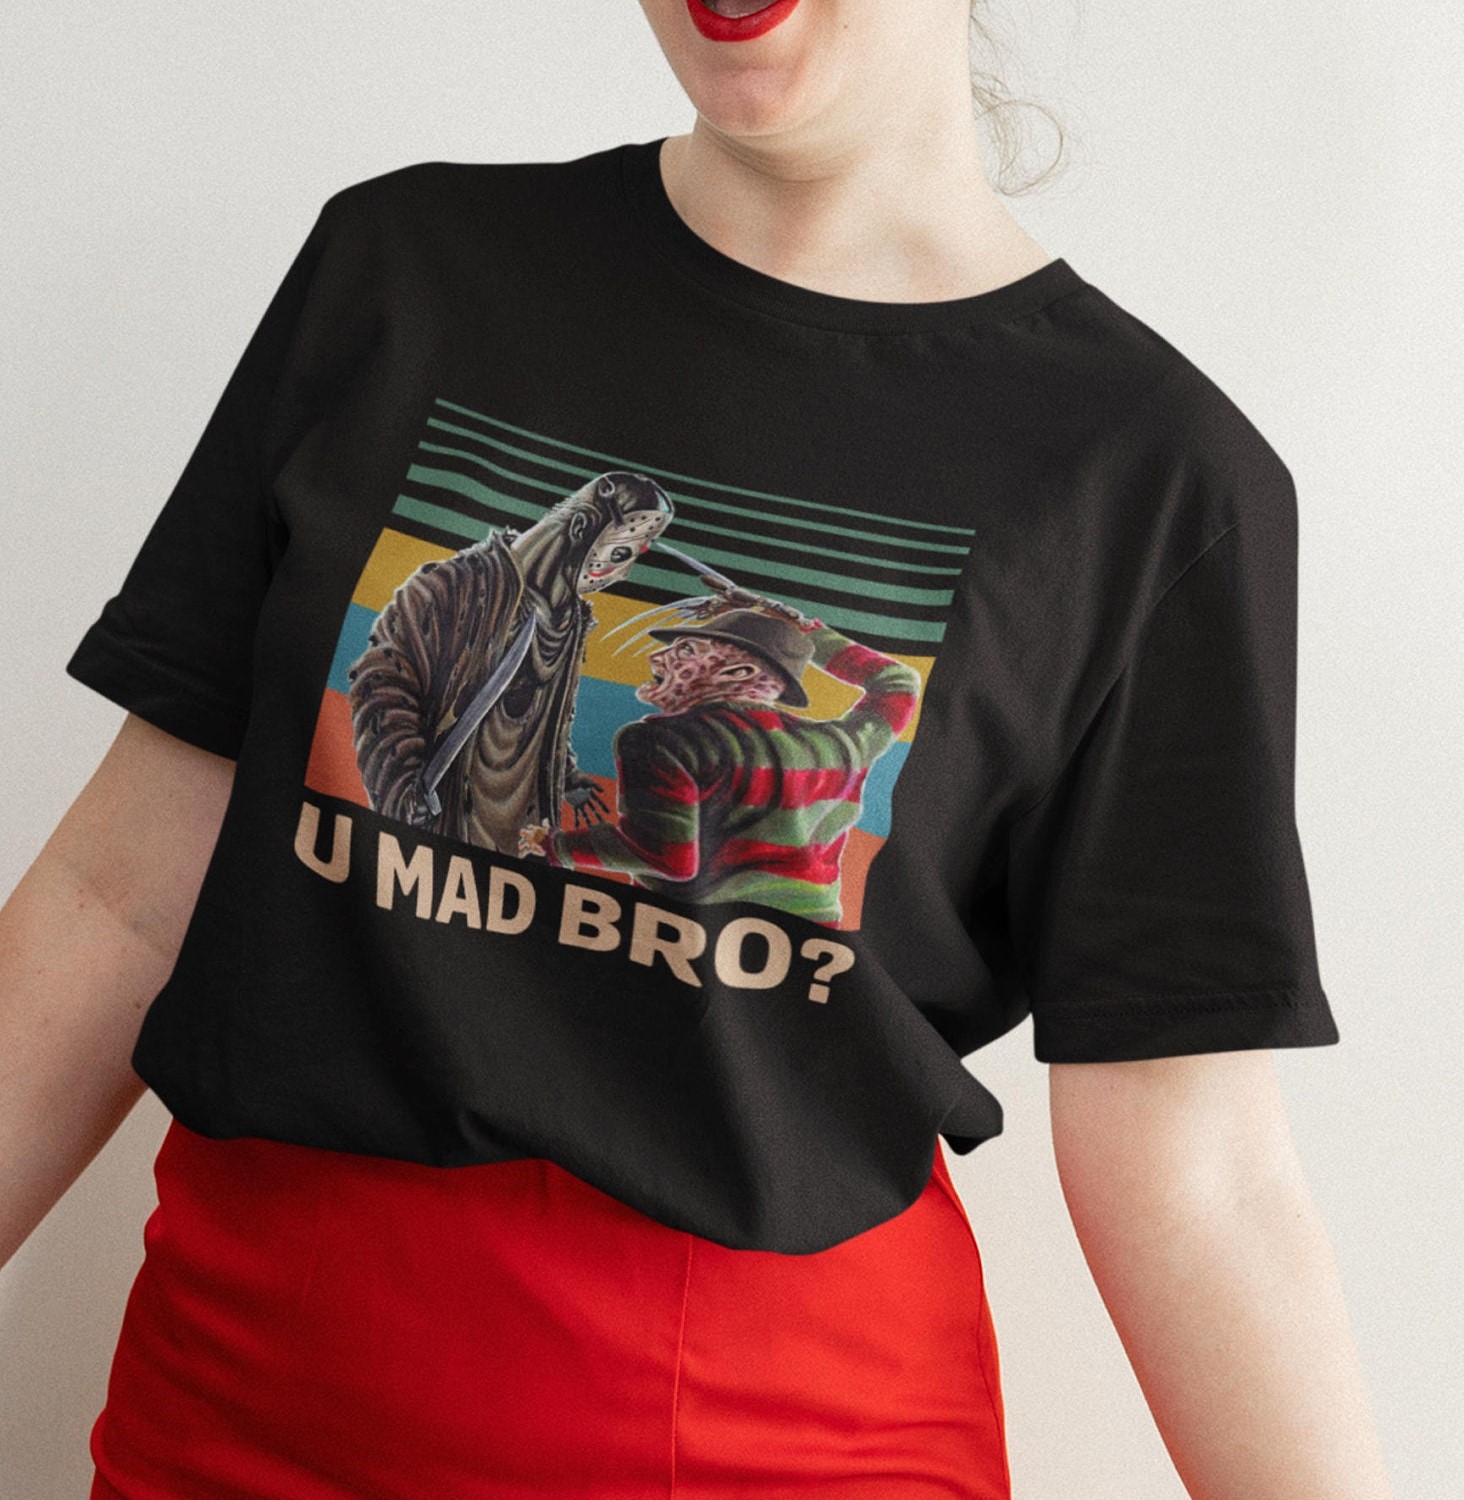 Freddy Krueger And Jason Voorhees U Mad Bro Horror Movie Horror Characters Halloween Unisex T-Shirt